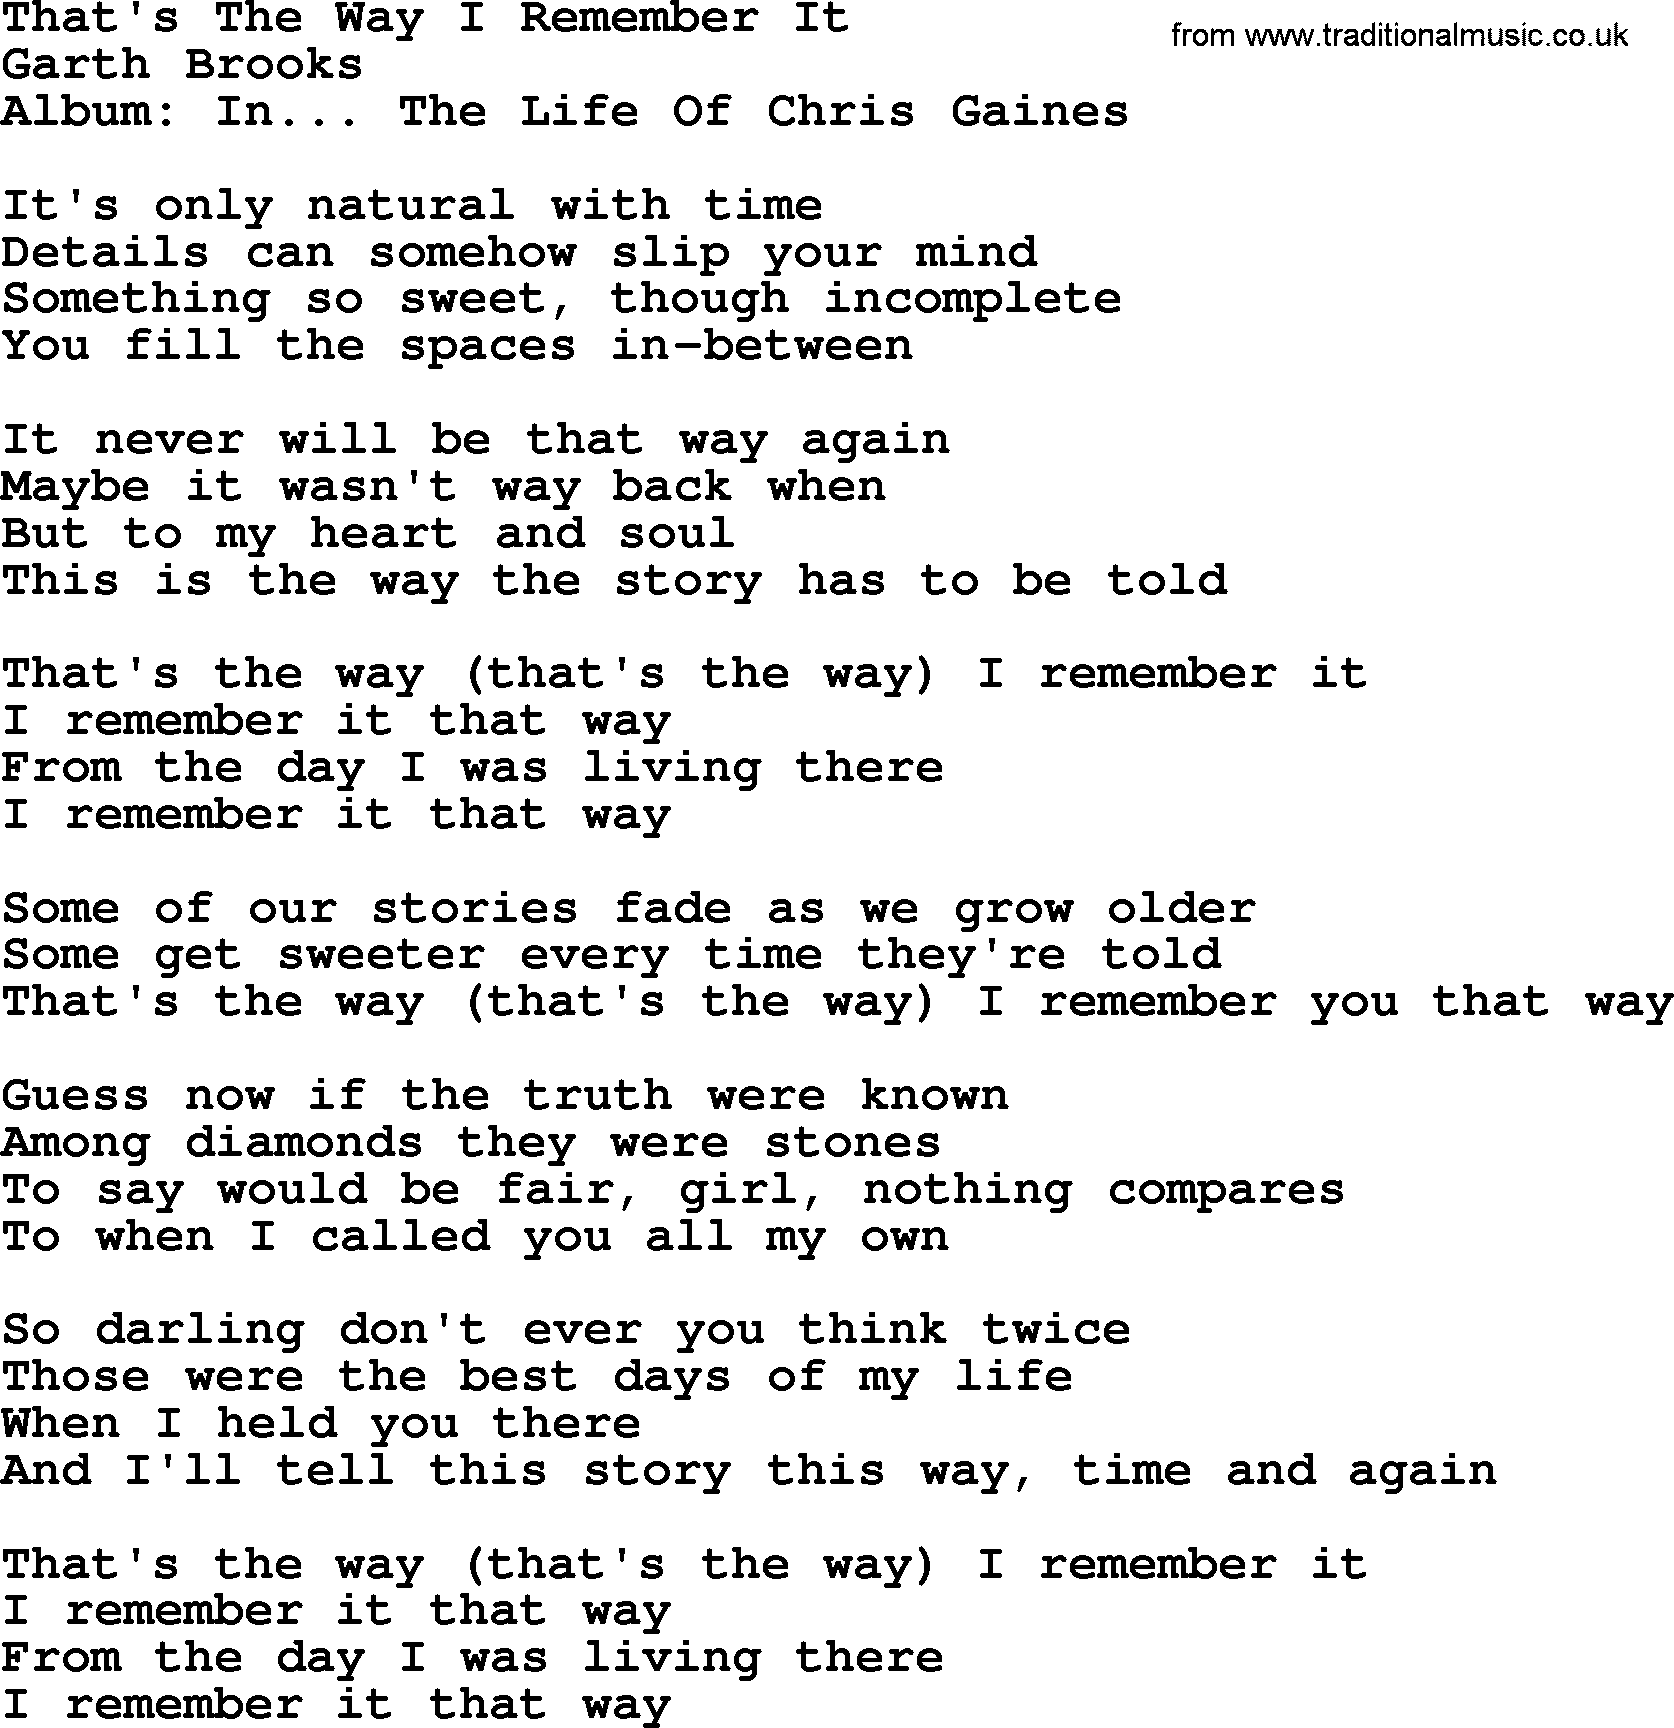 Garth Brooks song: That's The Way I Remember It, lyrics